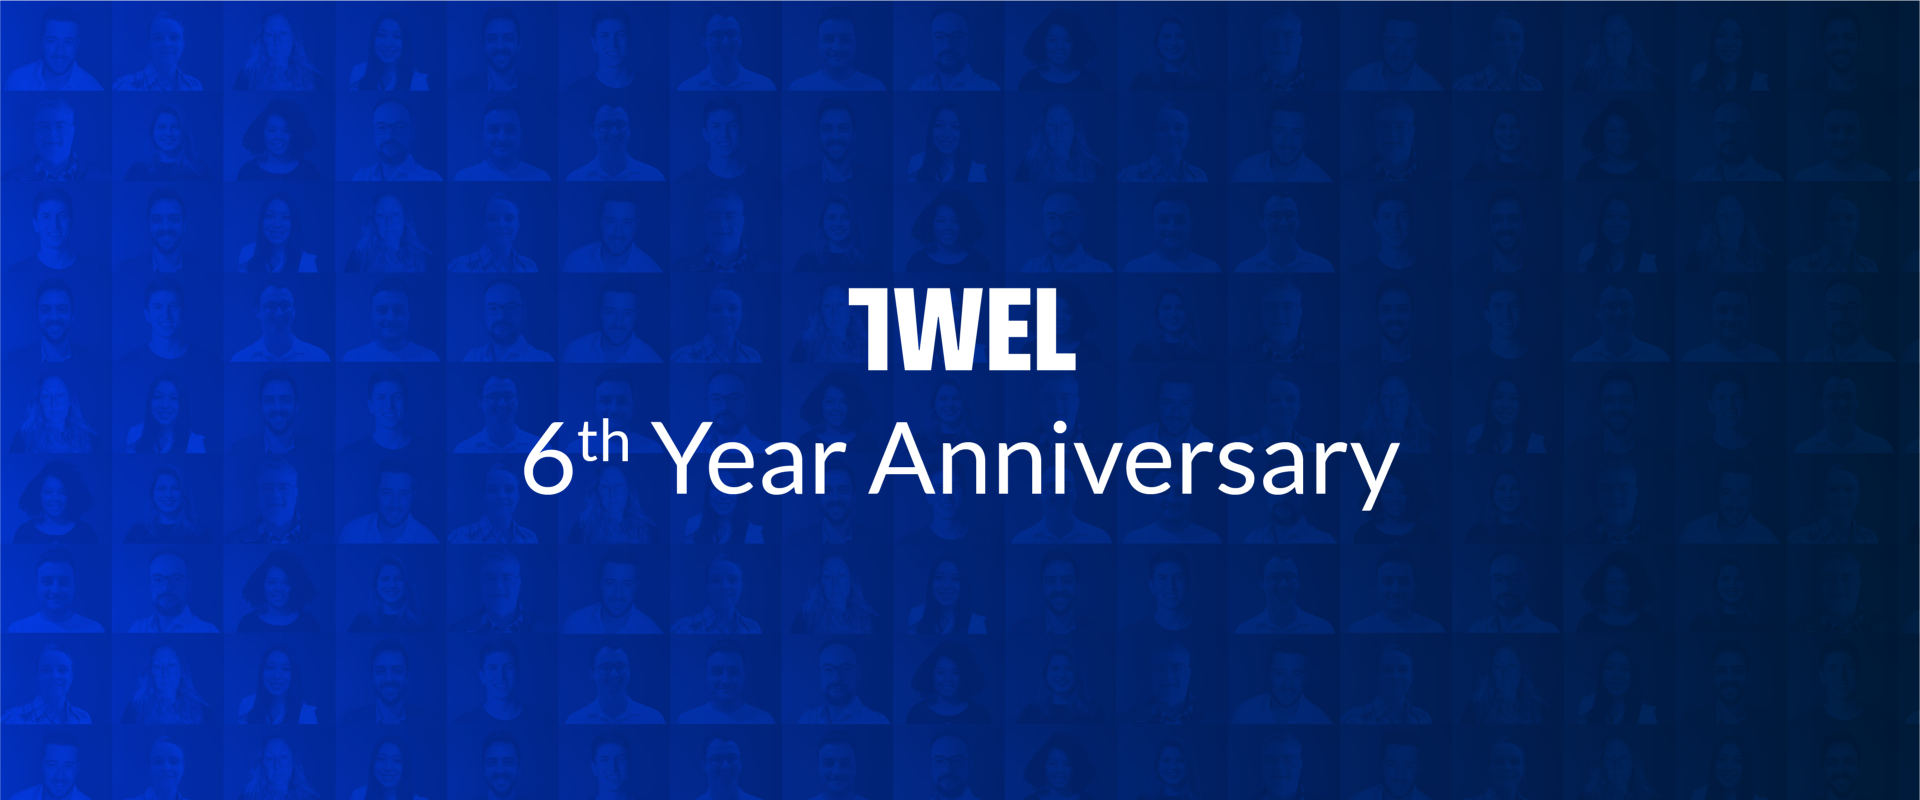 Twel 6th Year Anniversary